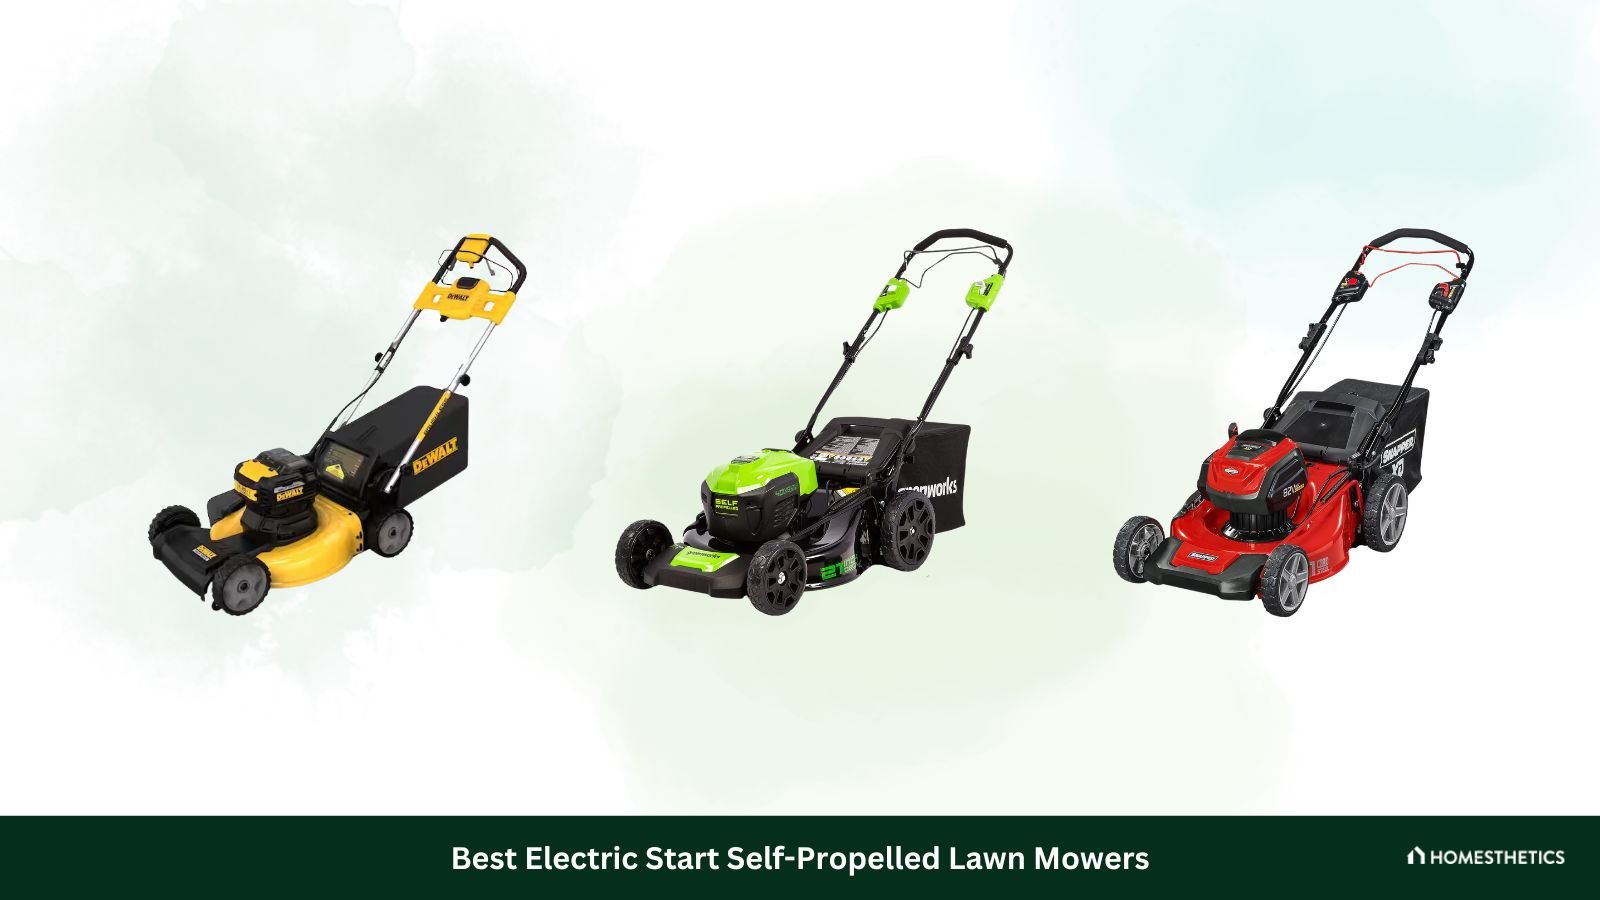 Best Electric Start Self-Propelled Lawn Mowers